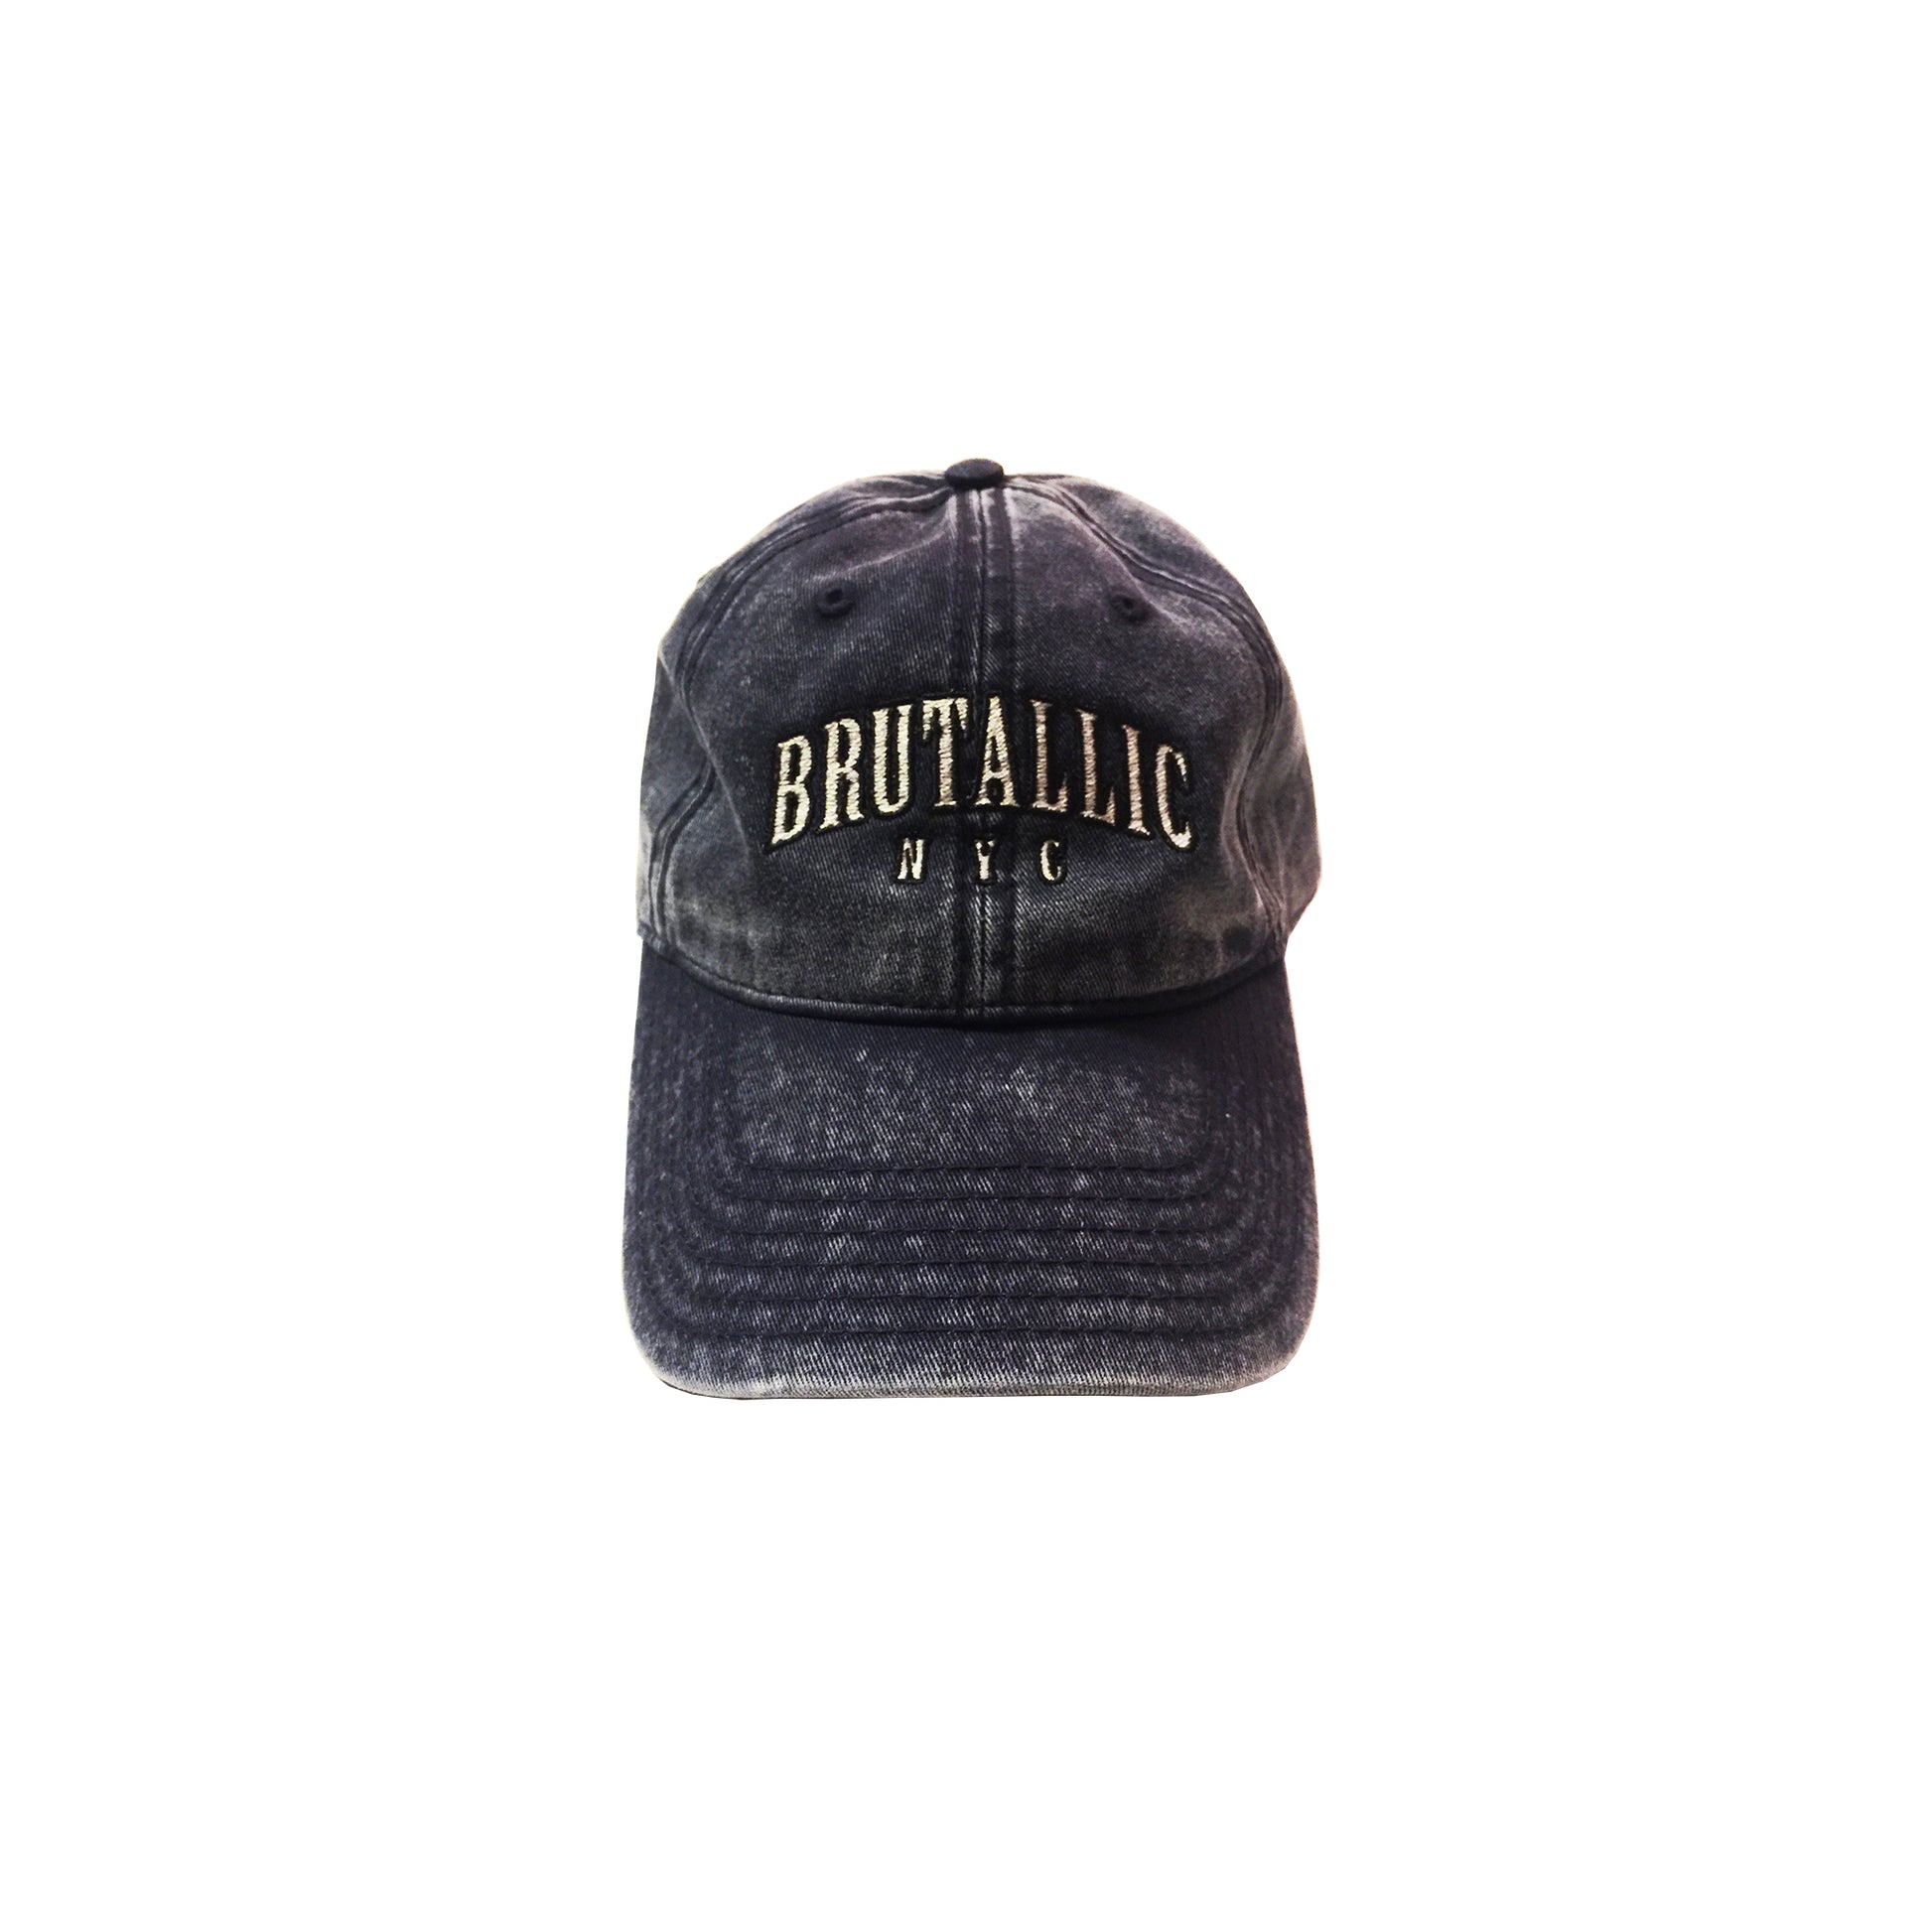 Brutallic Streetwear nyc denim hats dad hats small business